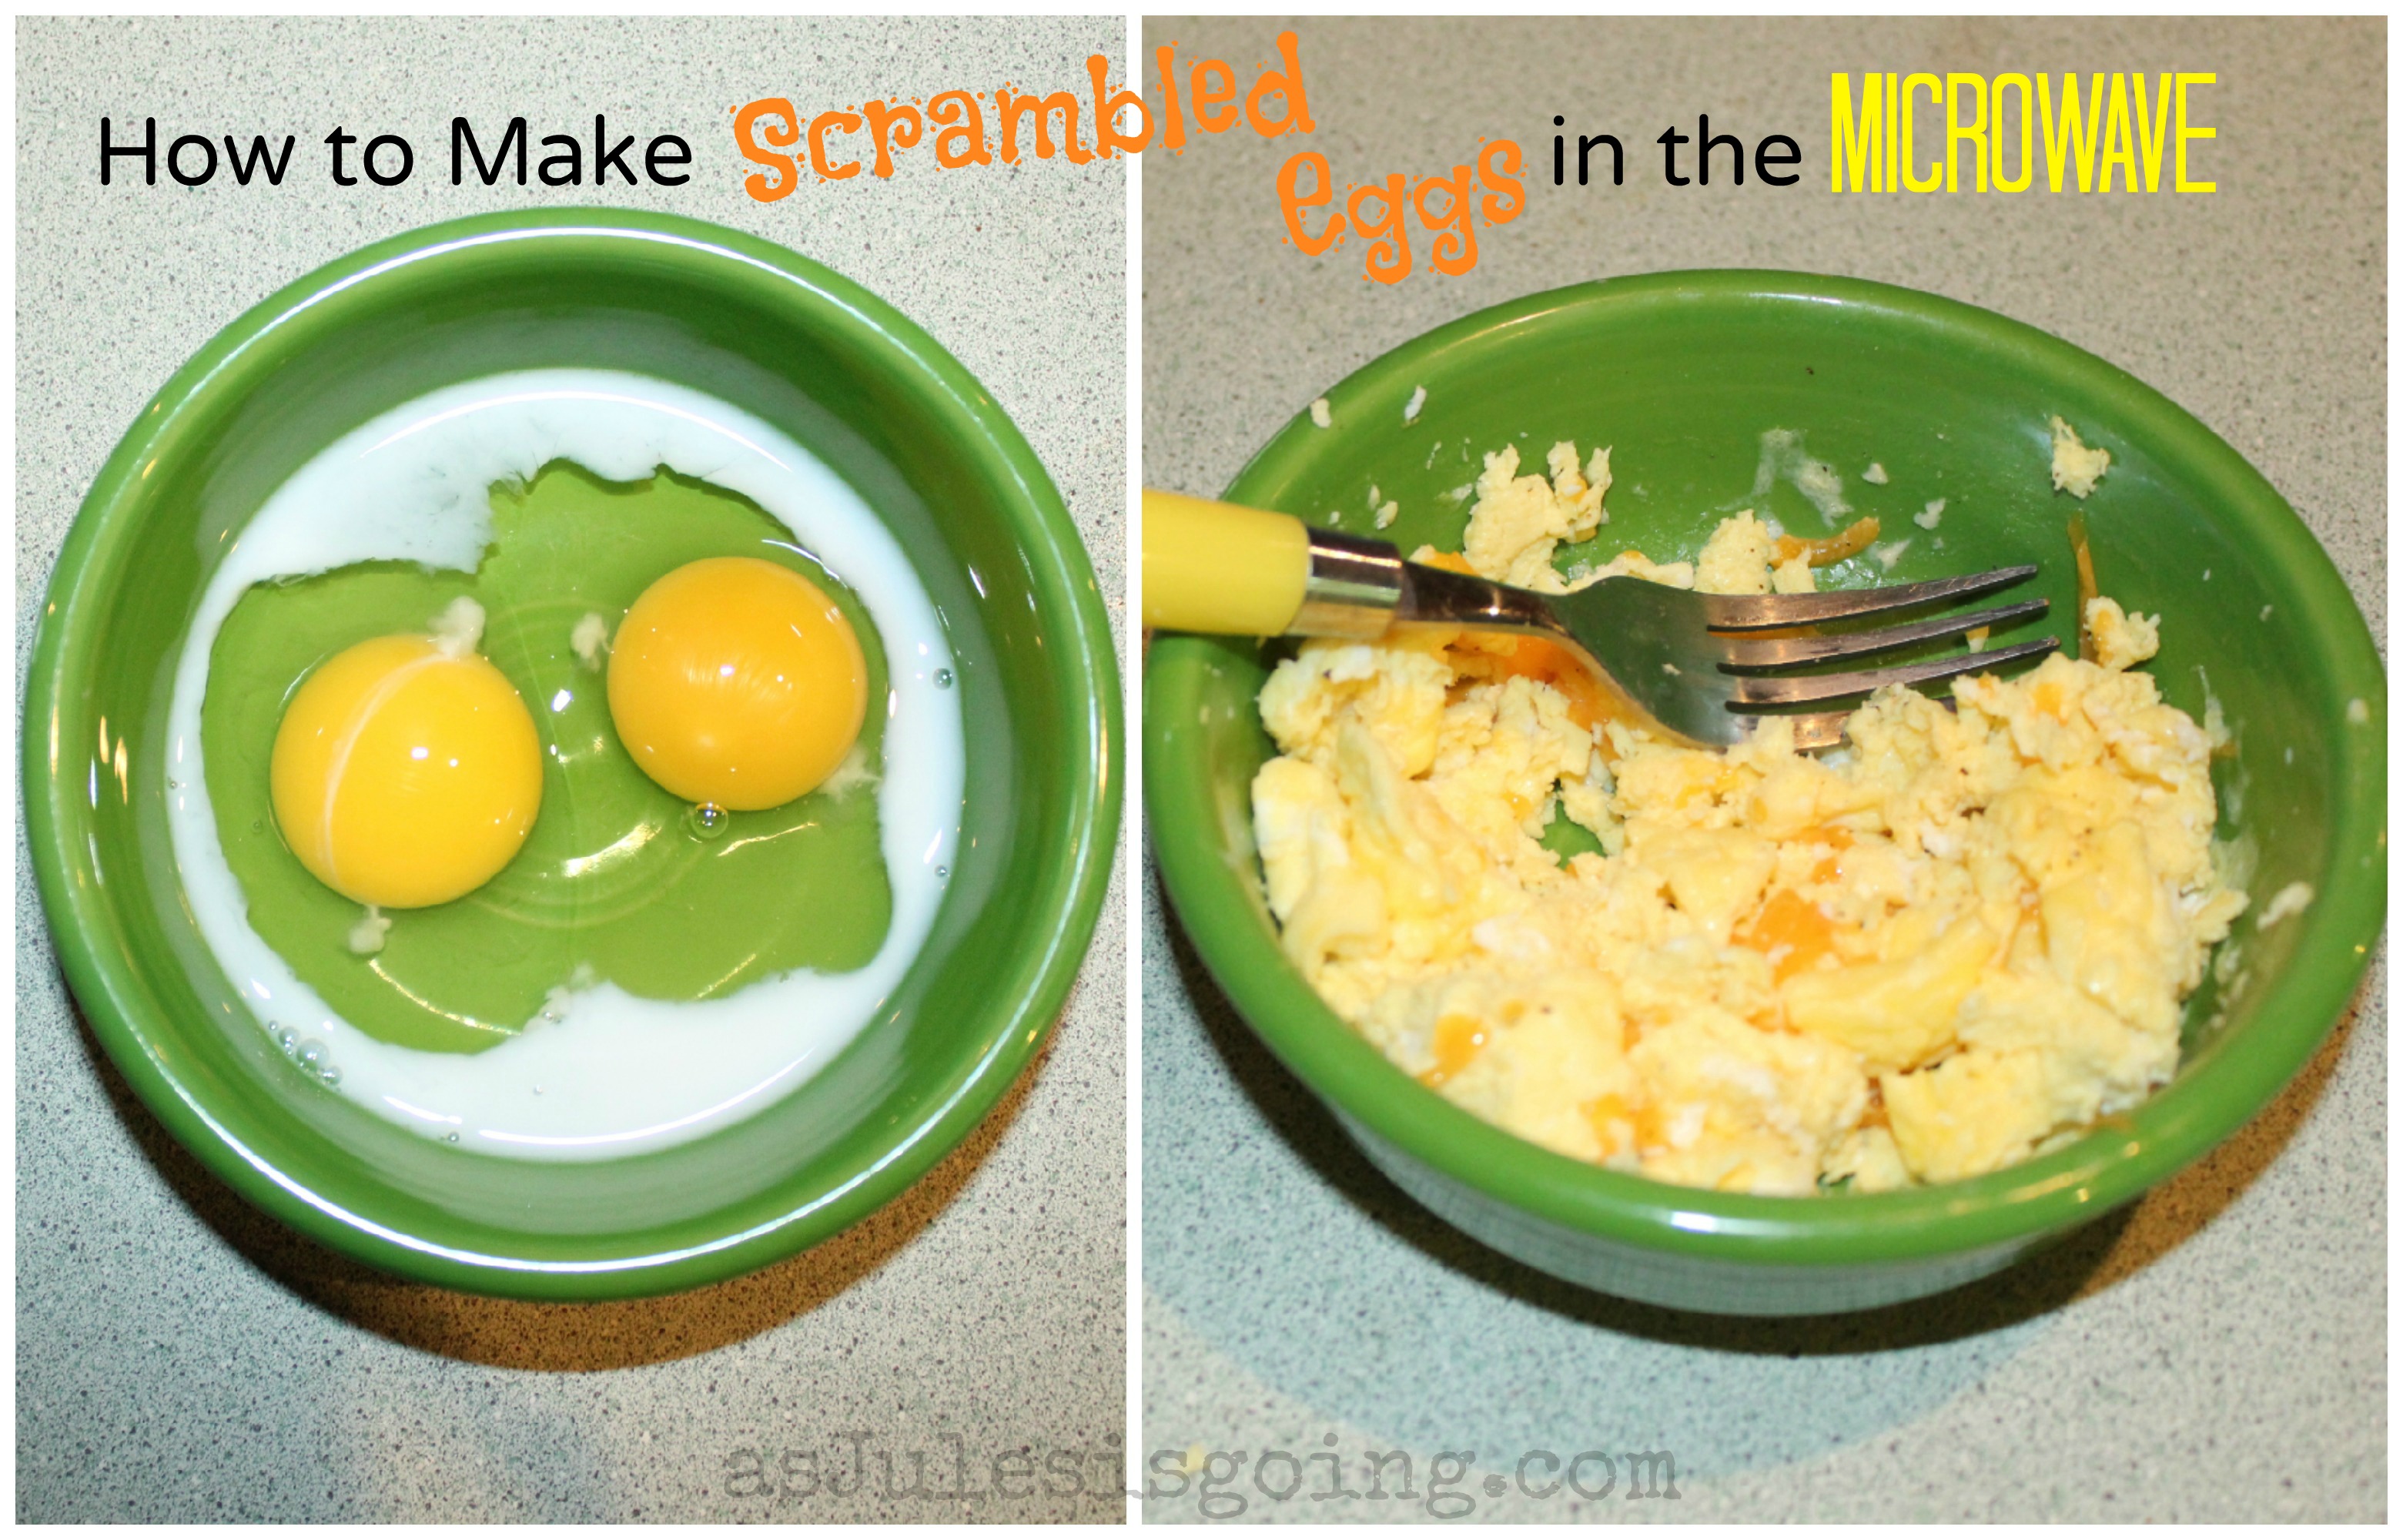 http://asjulesisgoing.com/wp-content/uploads/2013/05/Scrambled-Eggs-in-the-MICROWAVE.jpg